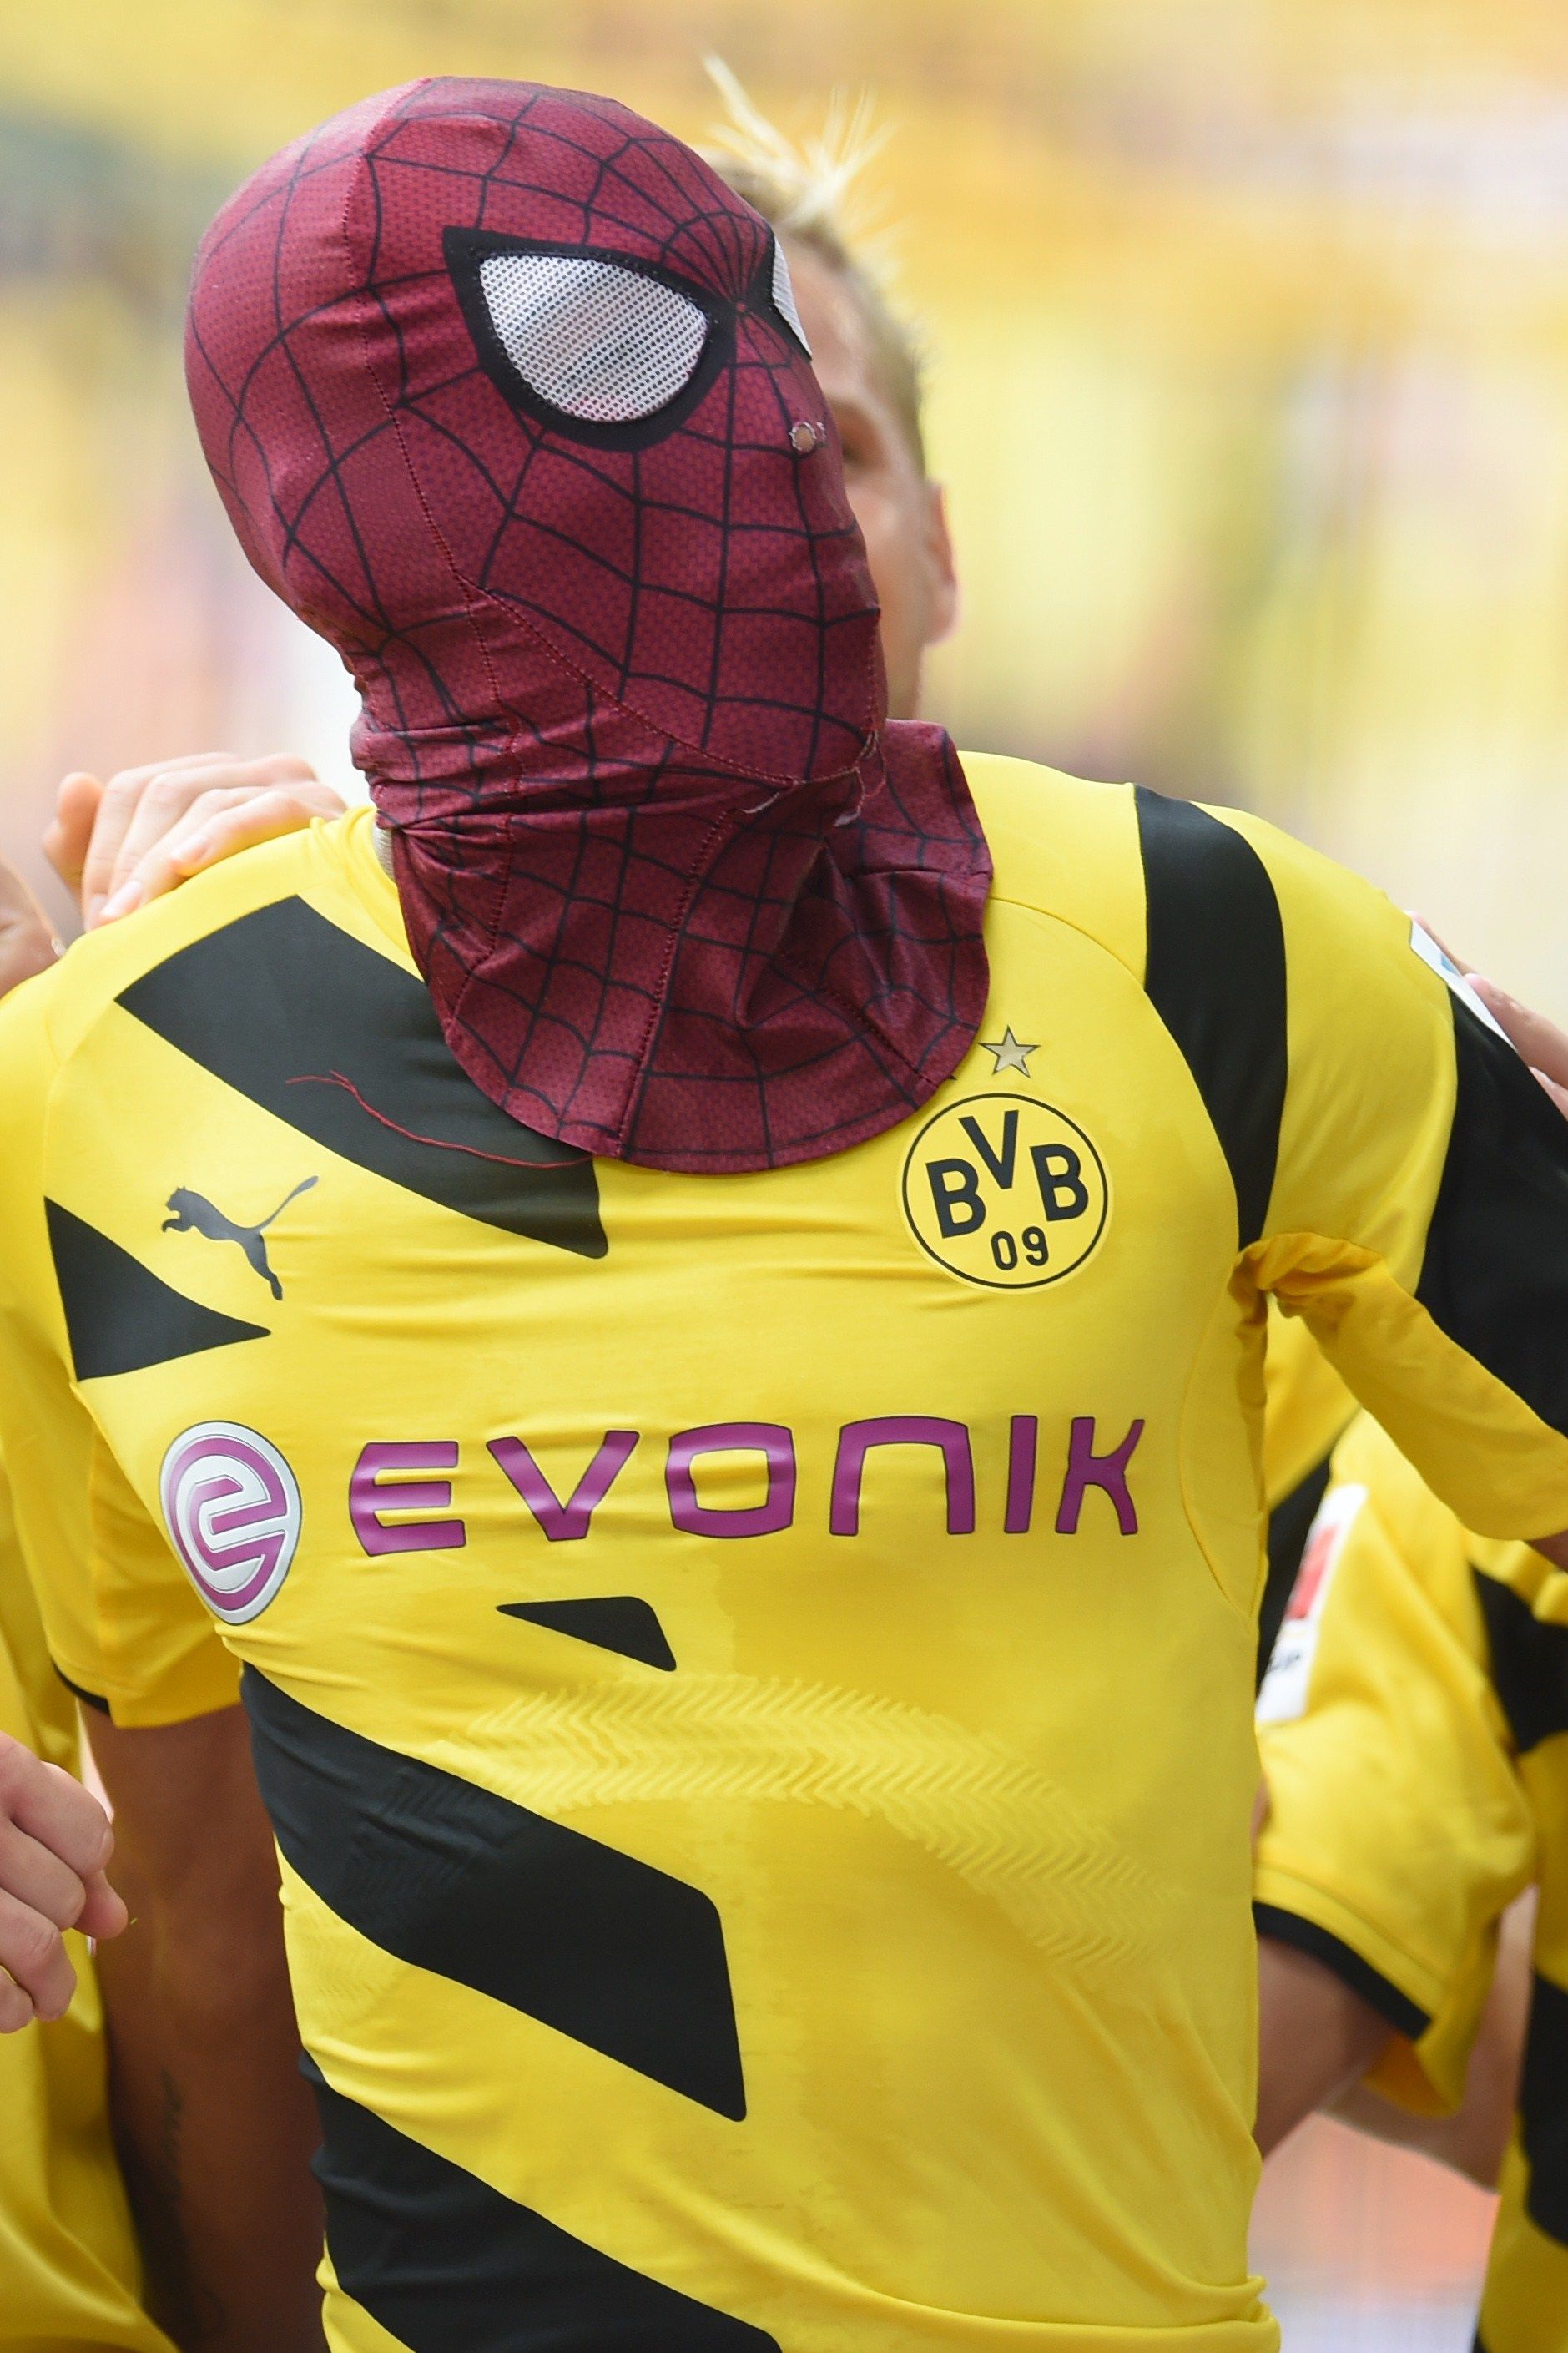 Borussia Dortmund star Aubameyang aims to be 